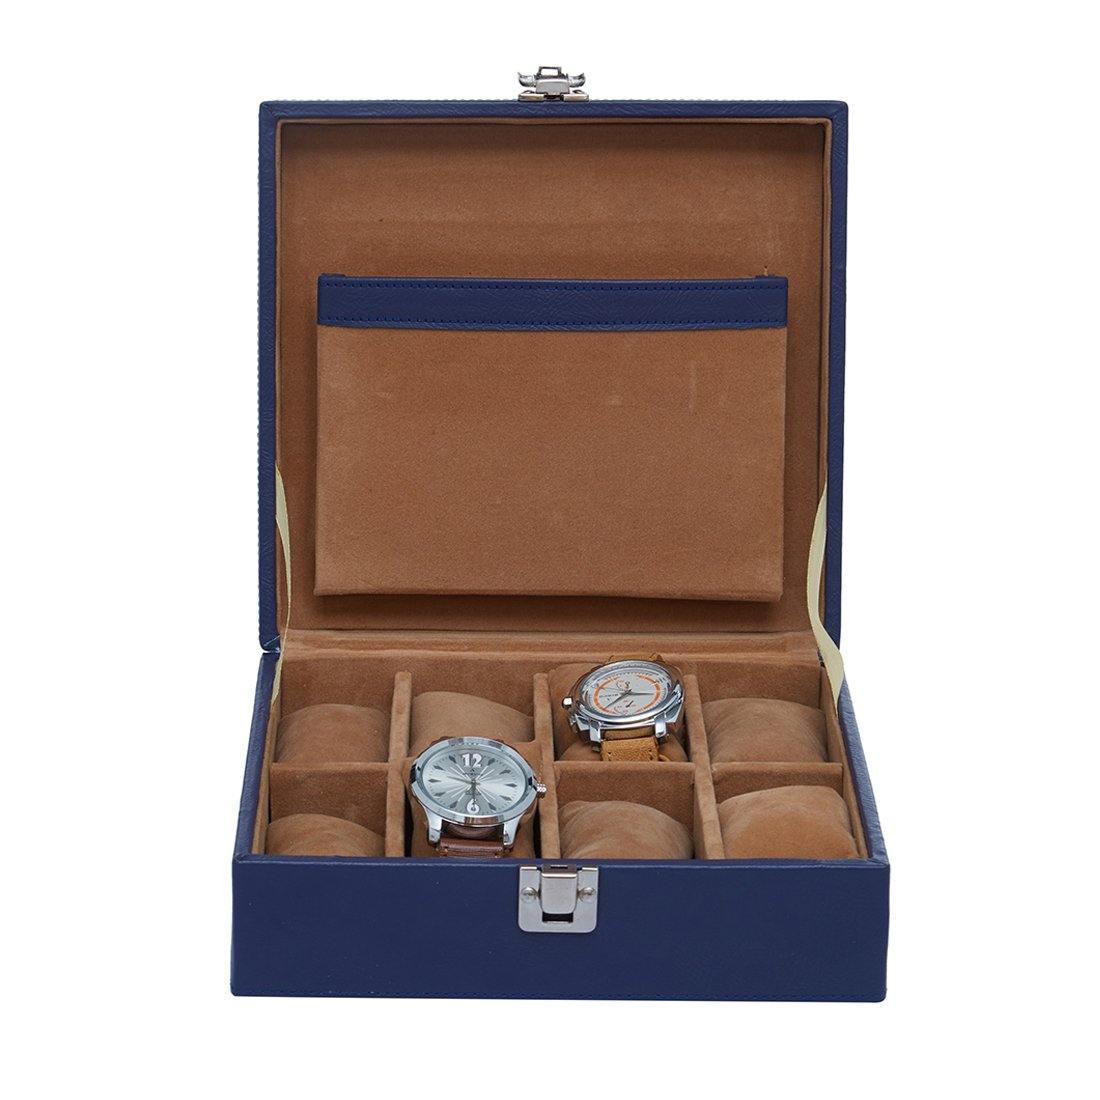 8 Slots Elegant Watch Organizer Box With Plain PU Leather Finish